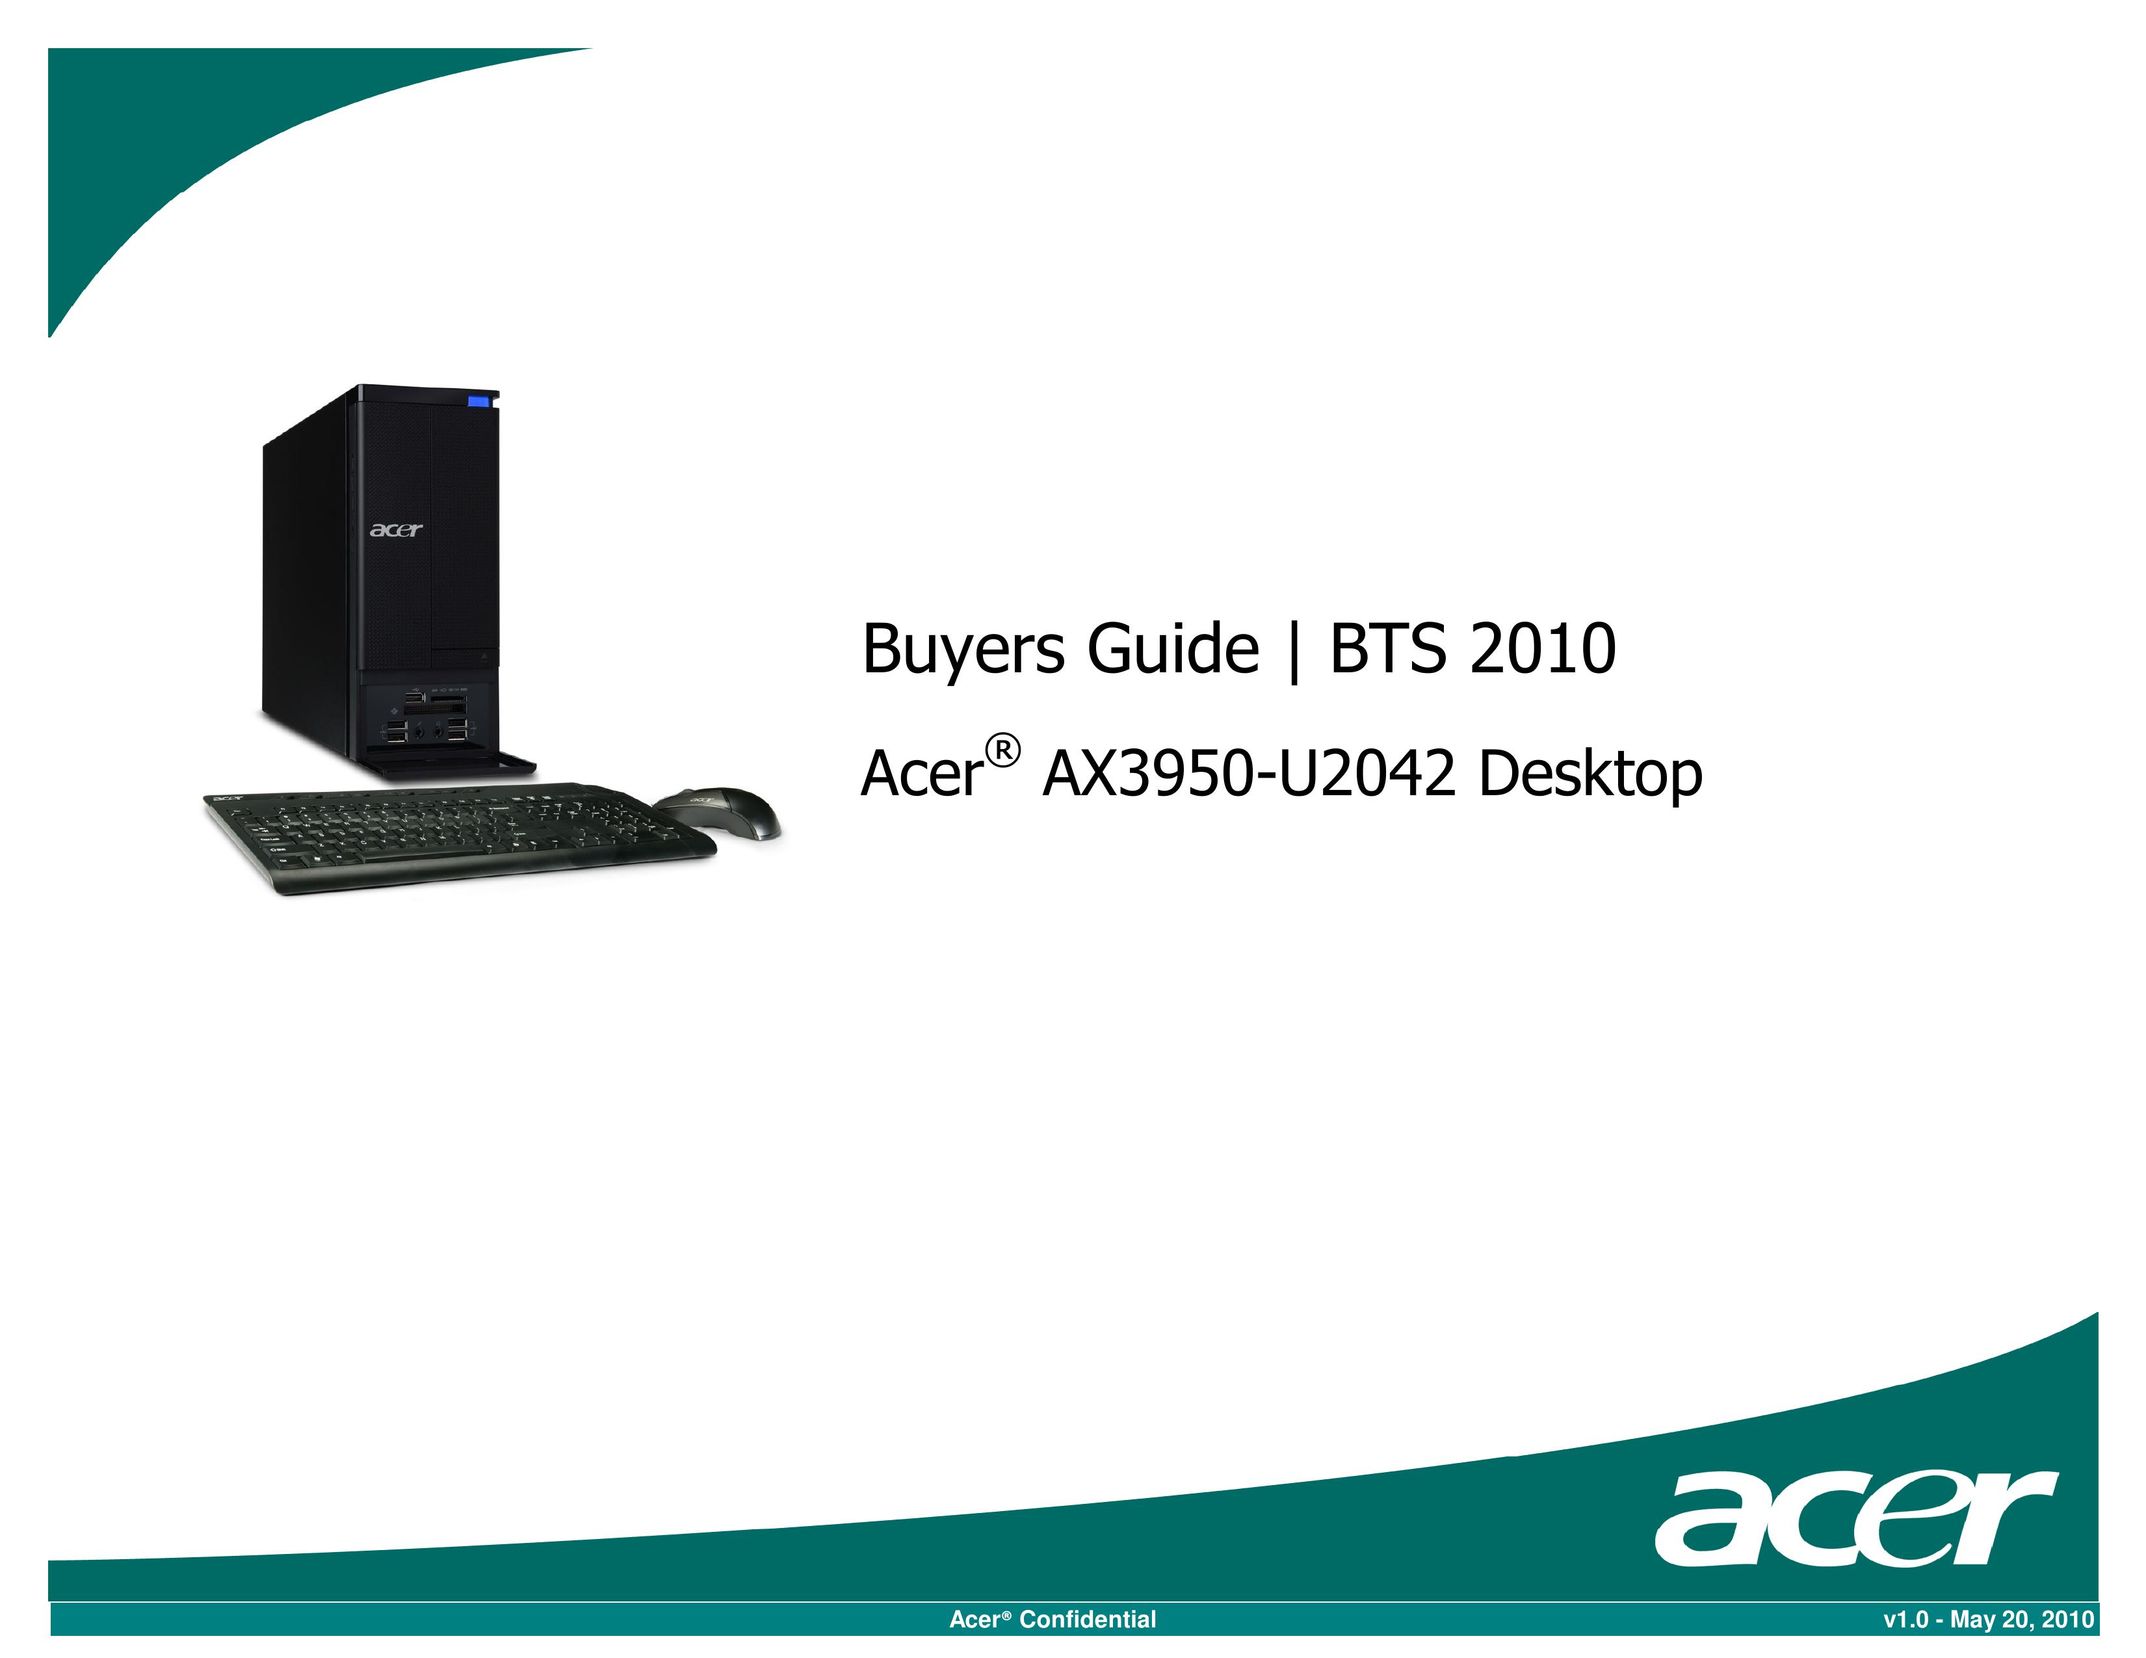 Acer AX3950-U2042 Personal Computer User Manual